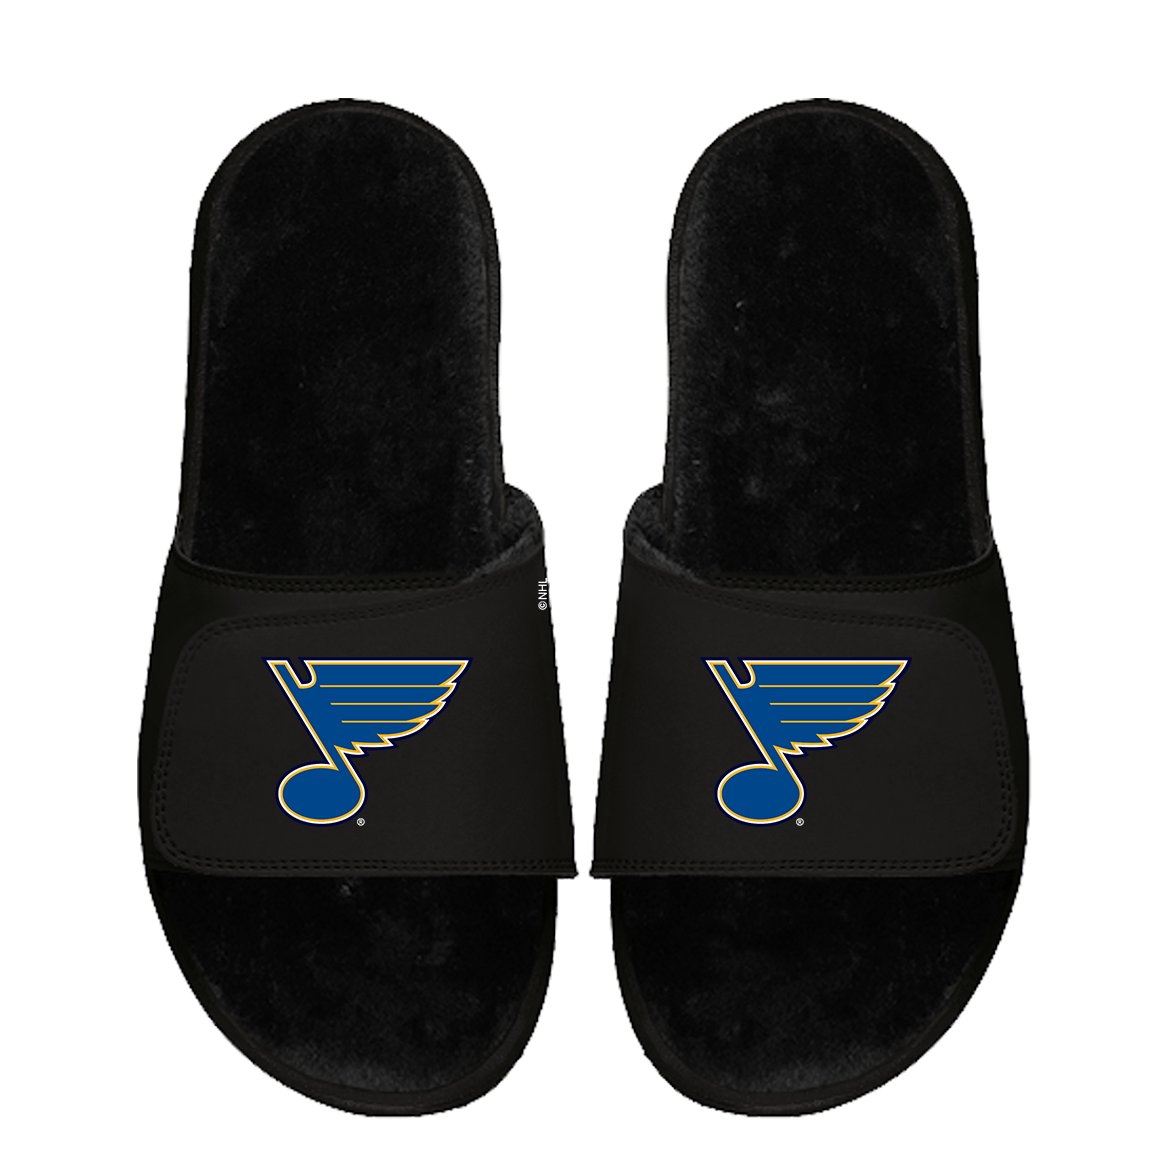 St. Louis Blues ISlide Robe & Slippers Bundle - Black